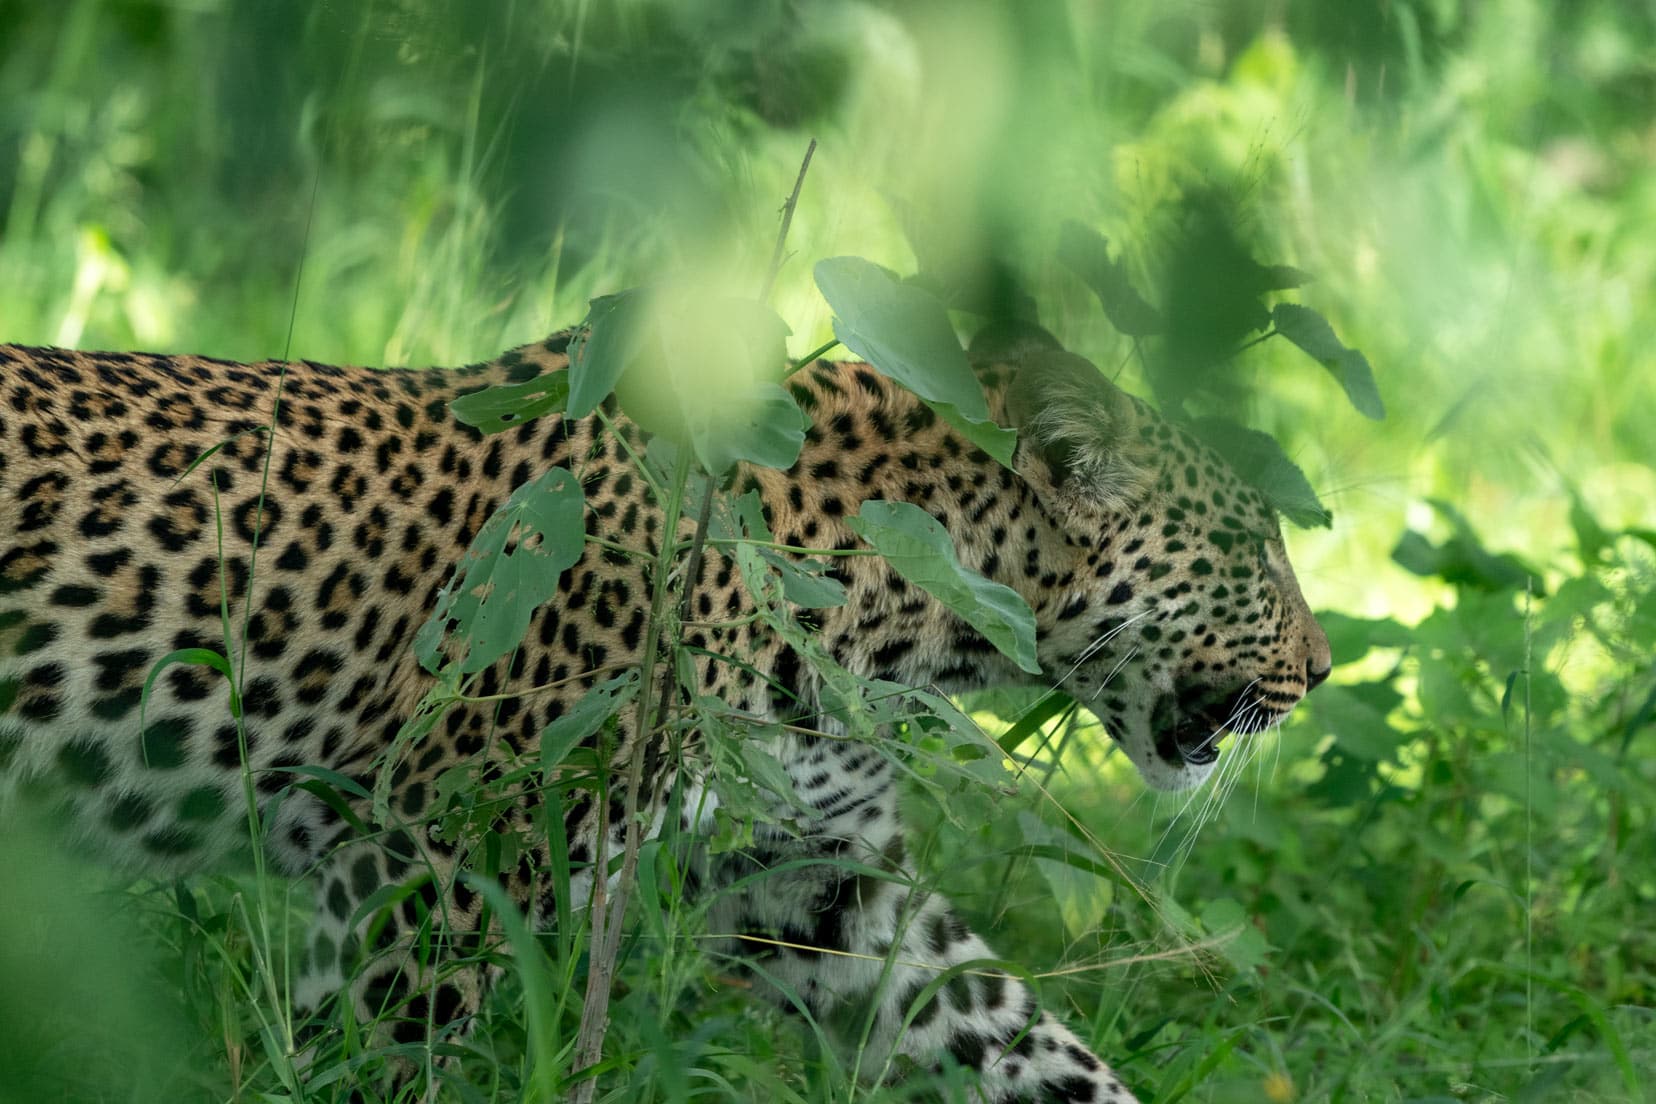 Leopard walking through the undergrowth